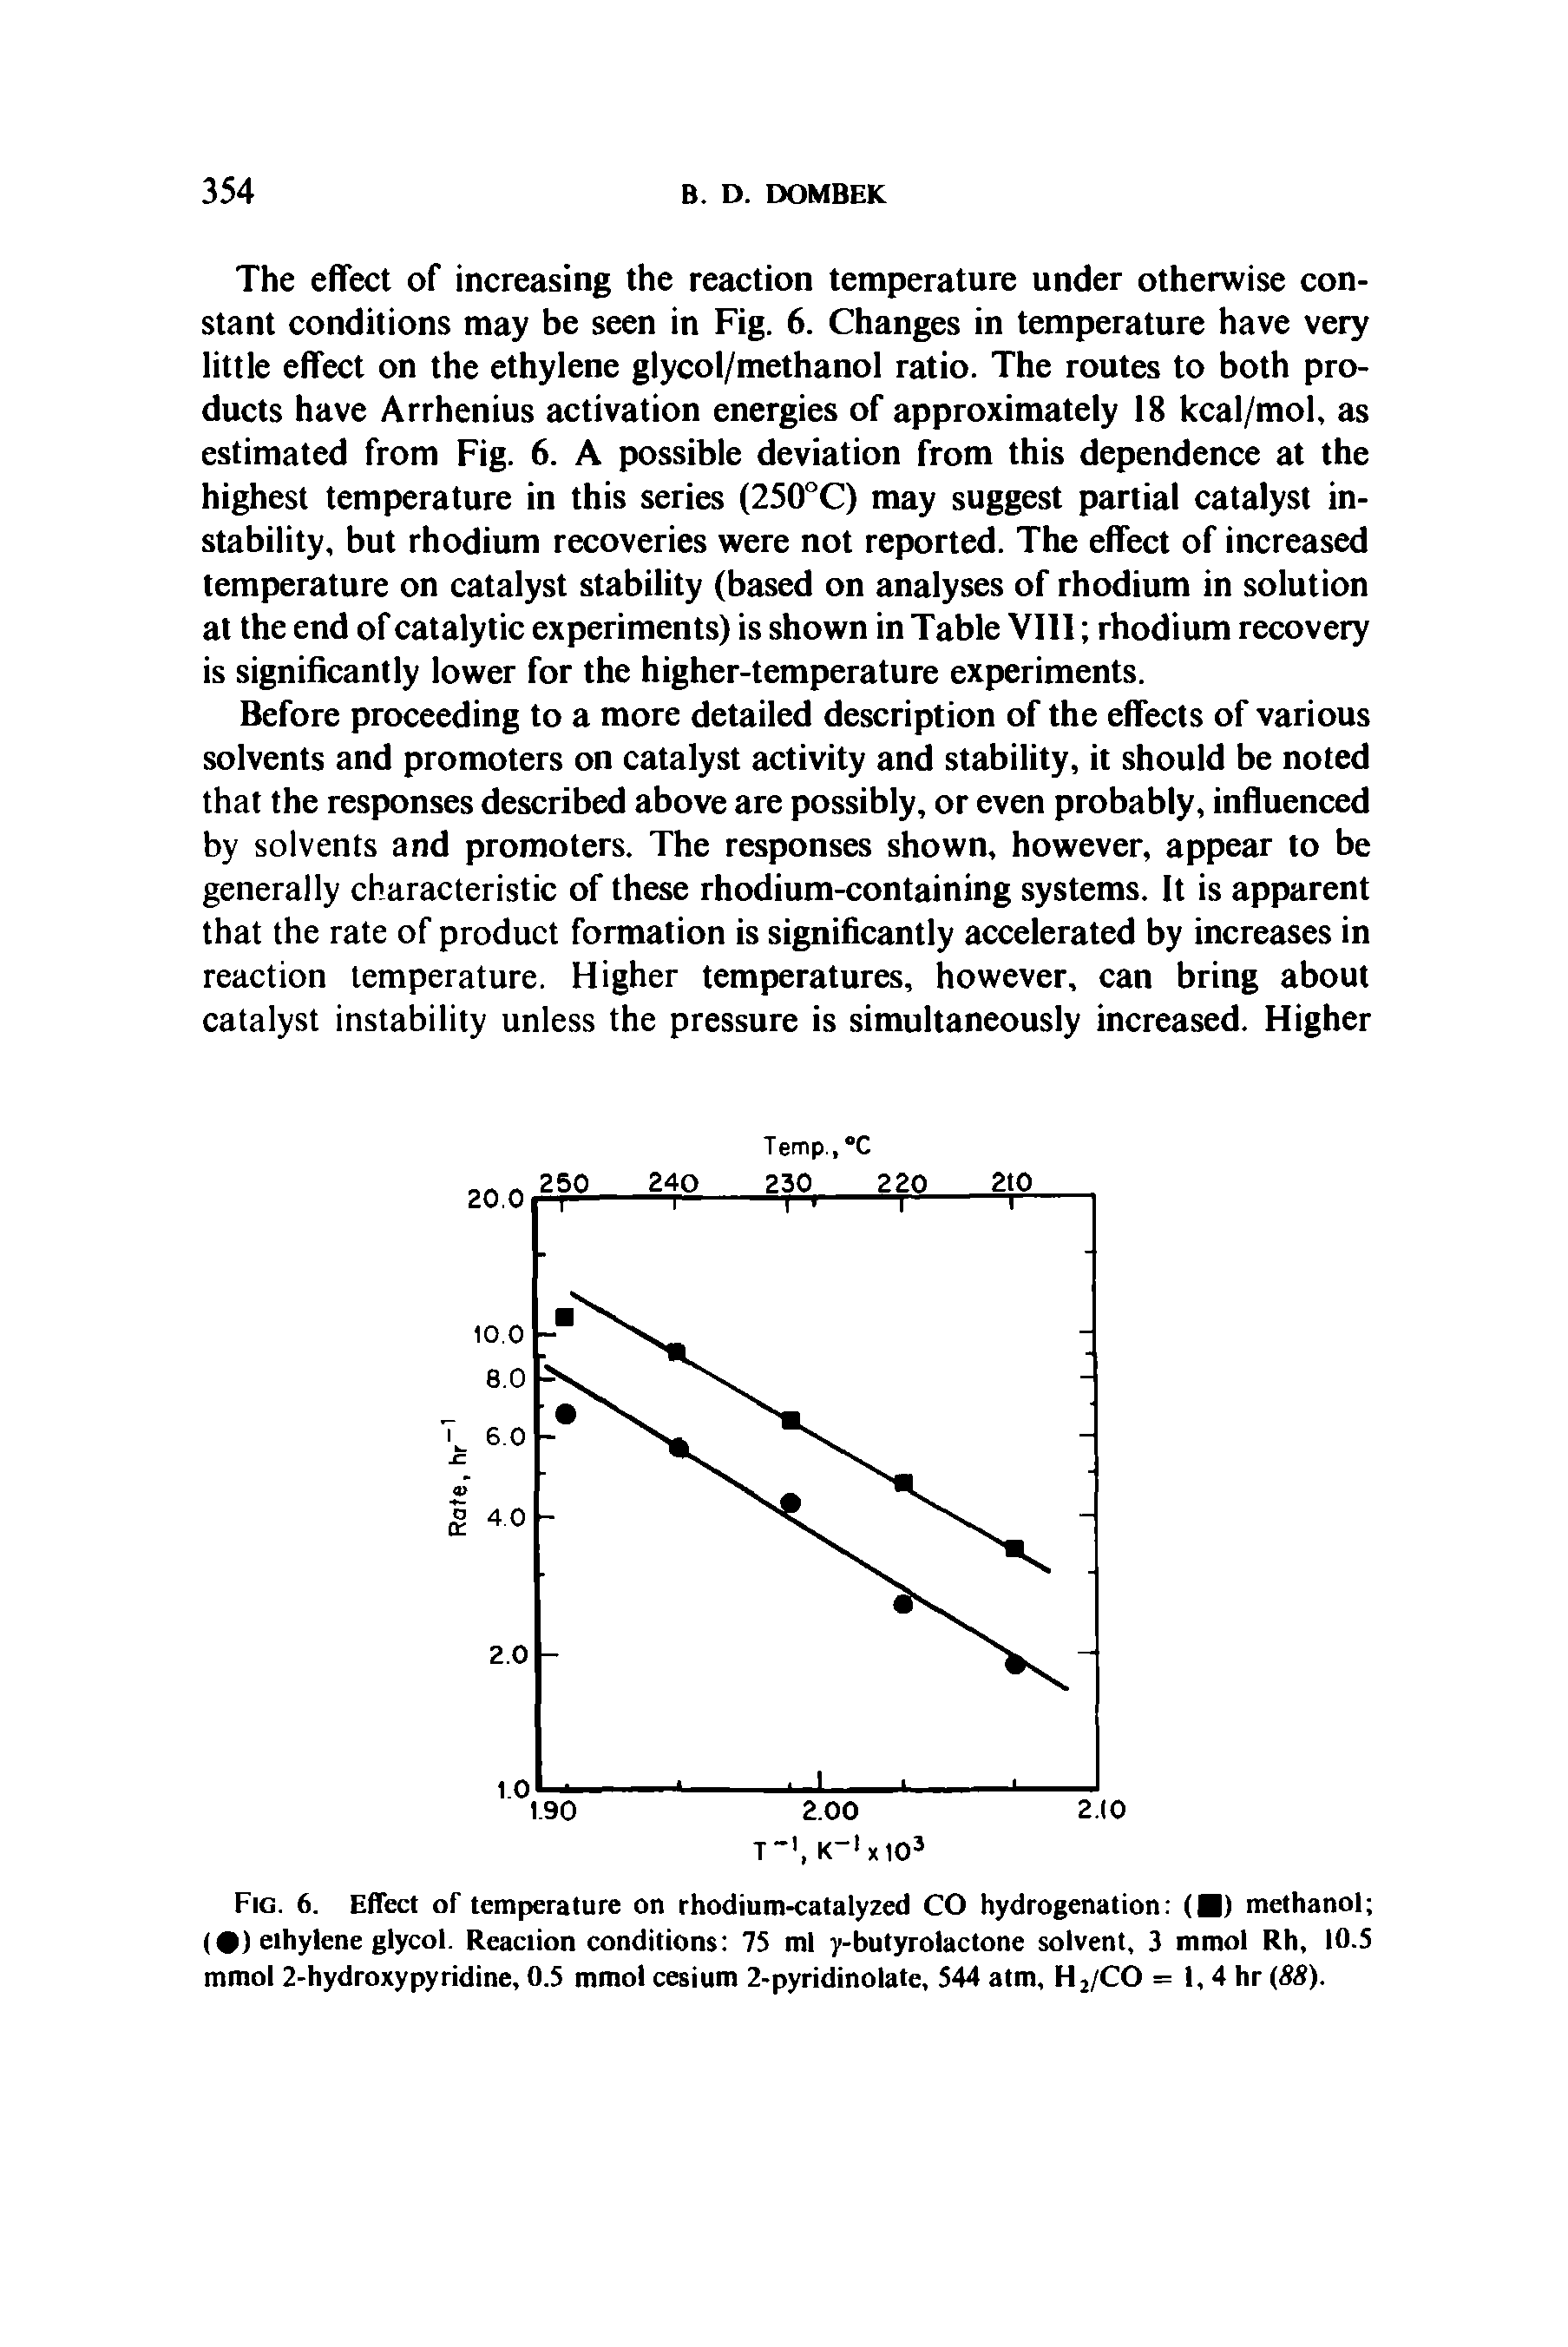 Fig. 6. Effect of temperature on rhodium-catalyzed CO hydrogenation ( ) methanol ( ) ethylene glycol. Reaction conditions 75 ml y-butyrolactone solvent, 3 mmol Rh, 10.5 mmol 2-hydroxypyridine, 0.5 mmol cesium 2-pyridinolate, 544 atm, H2/CO = 1, 4 hr (88).